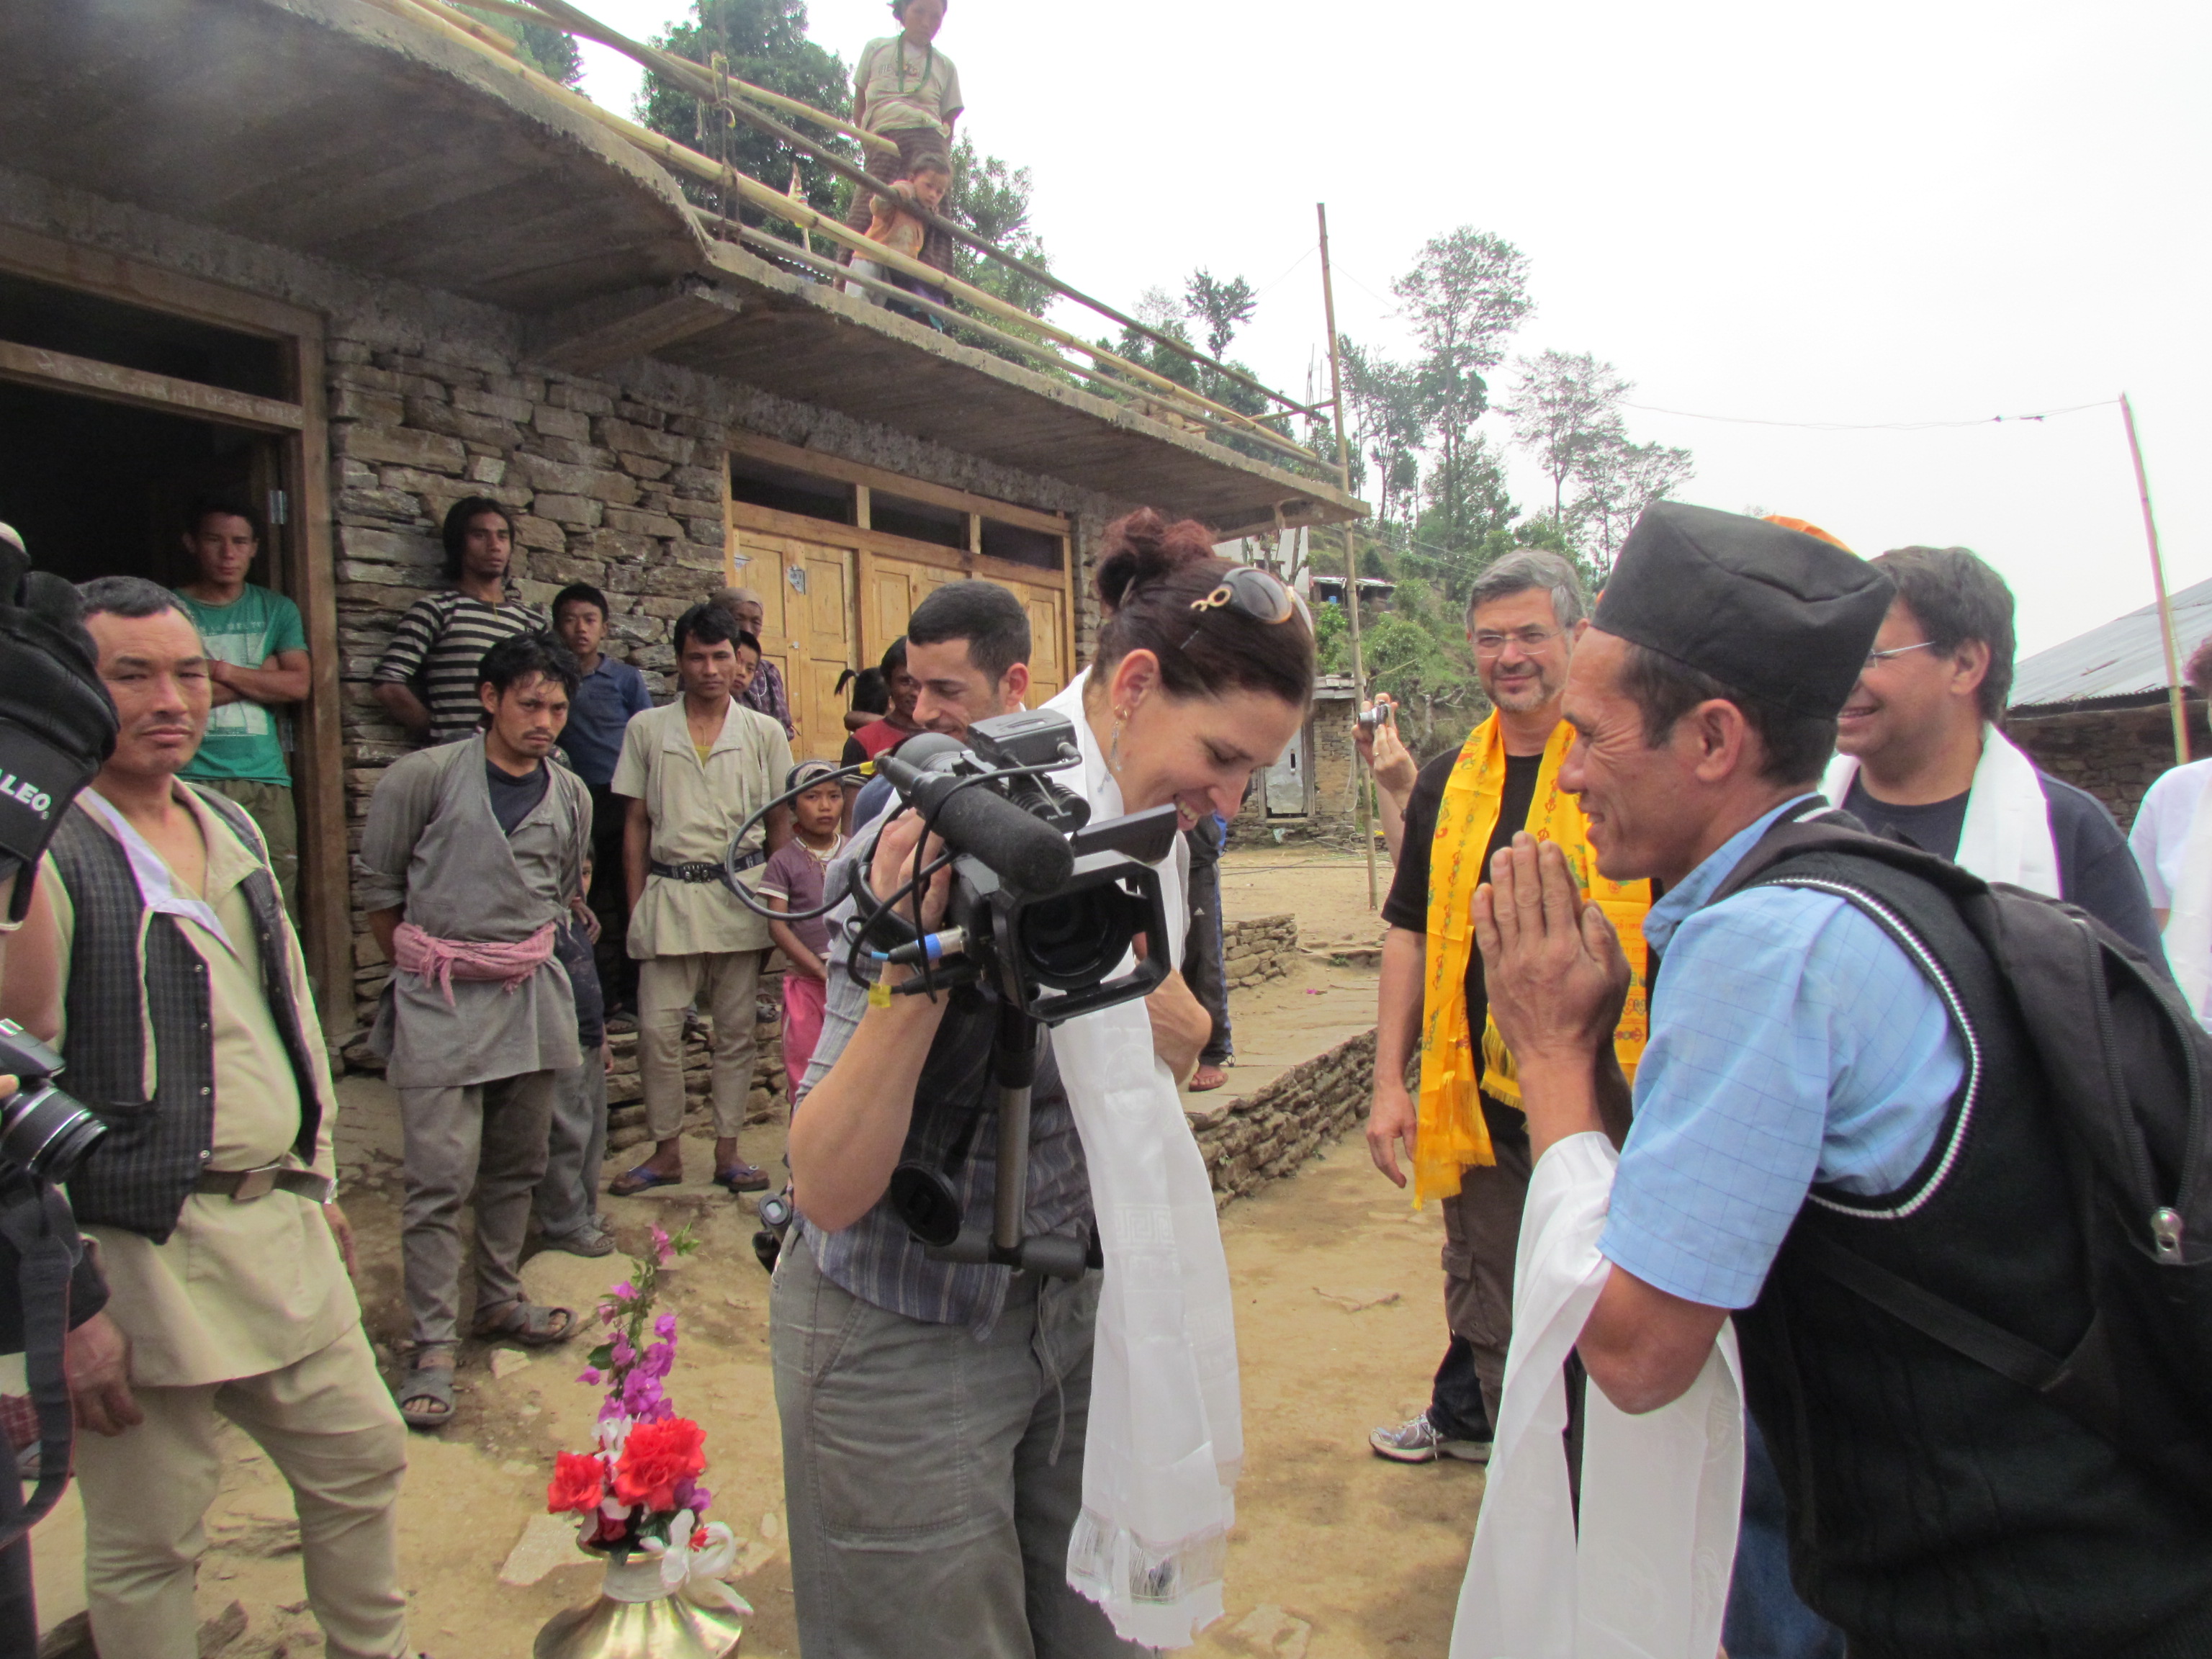 Mira Arad filming in the Himalayas.